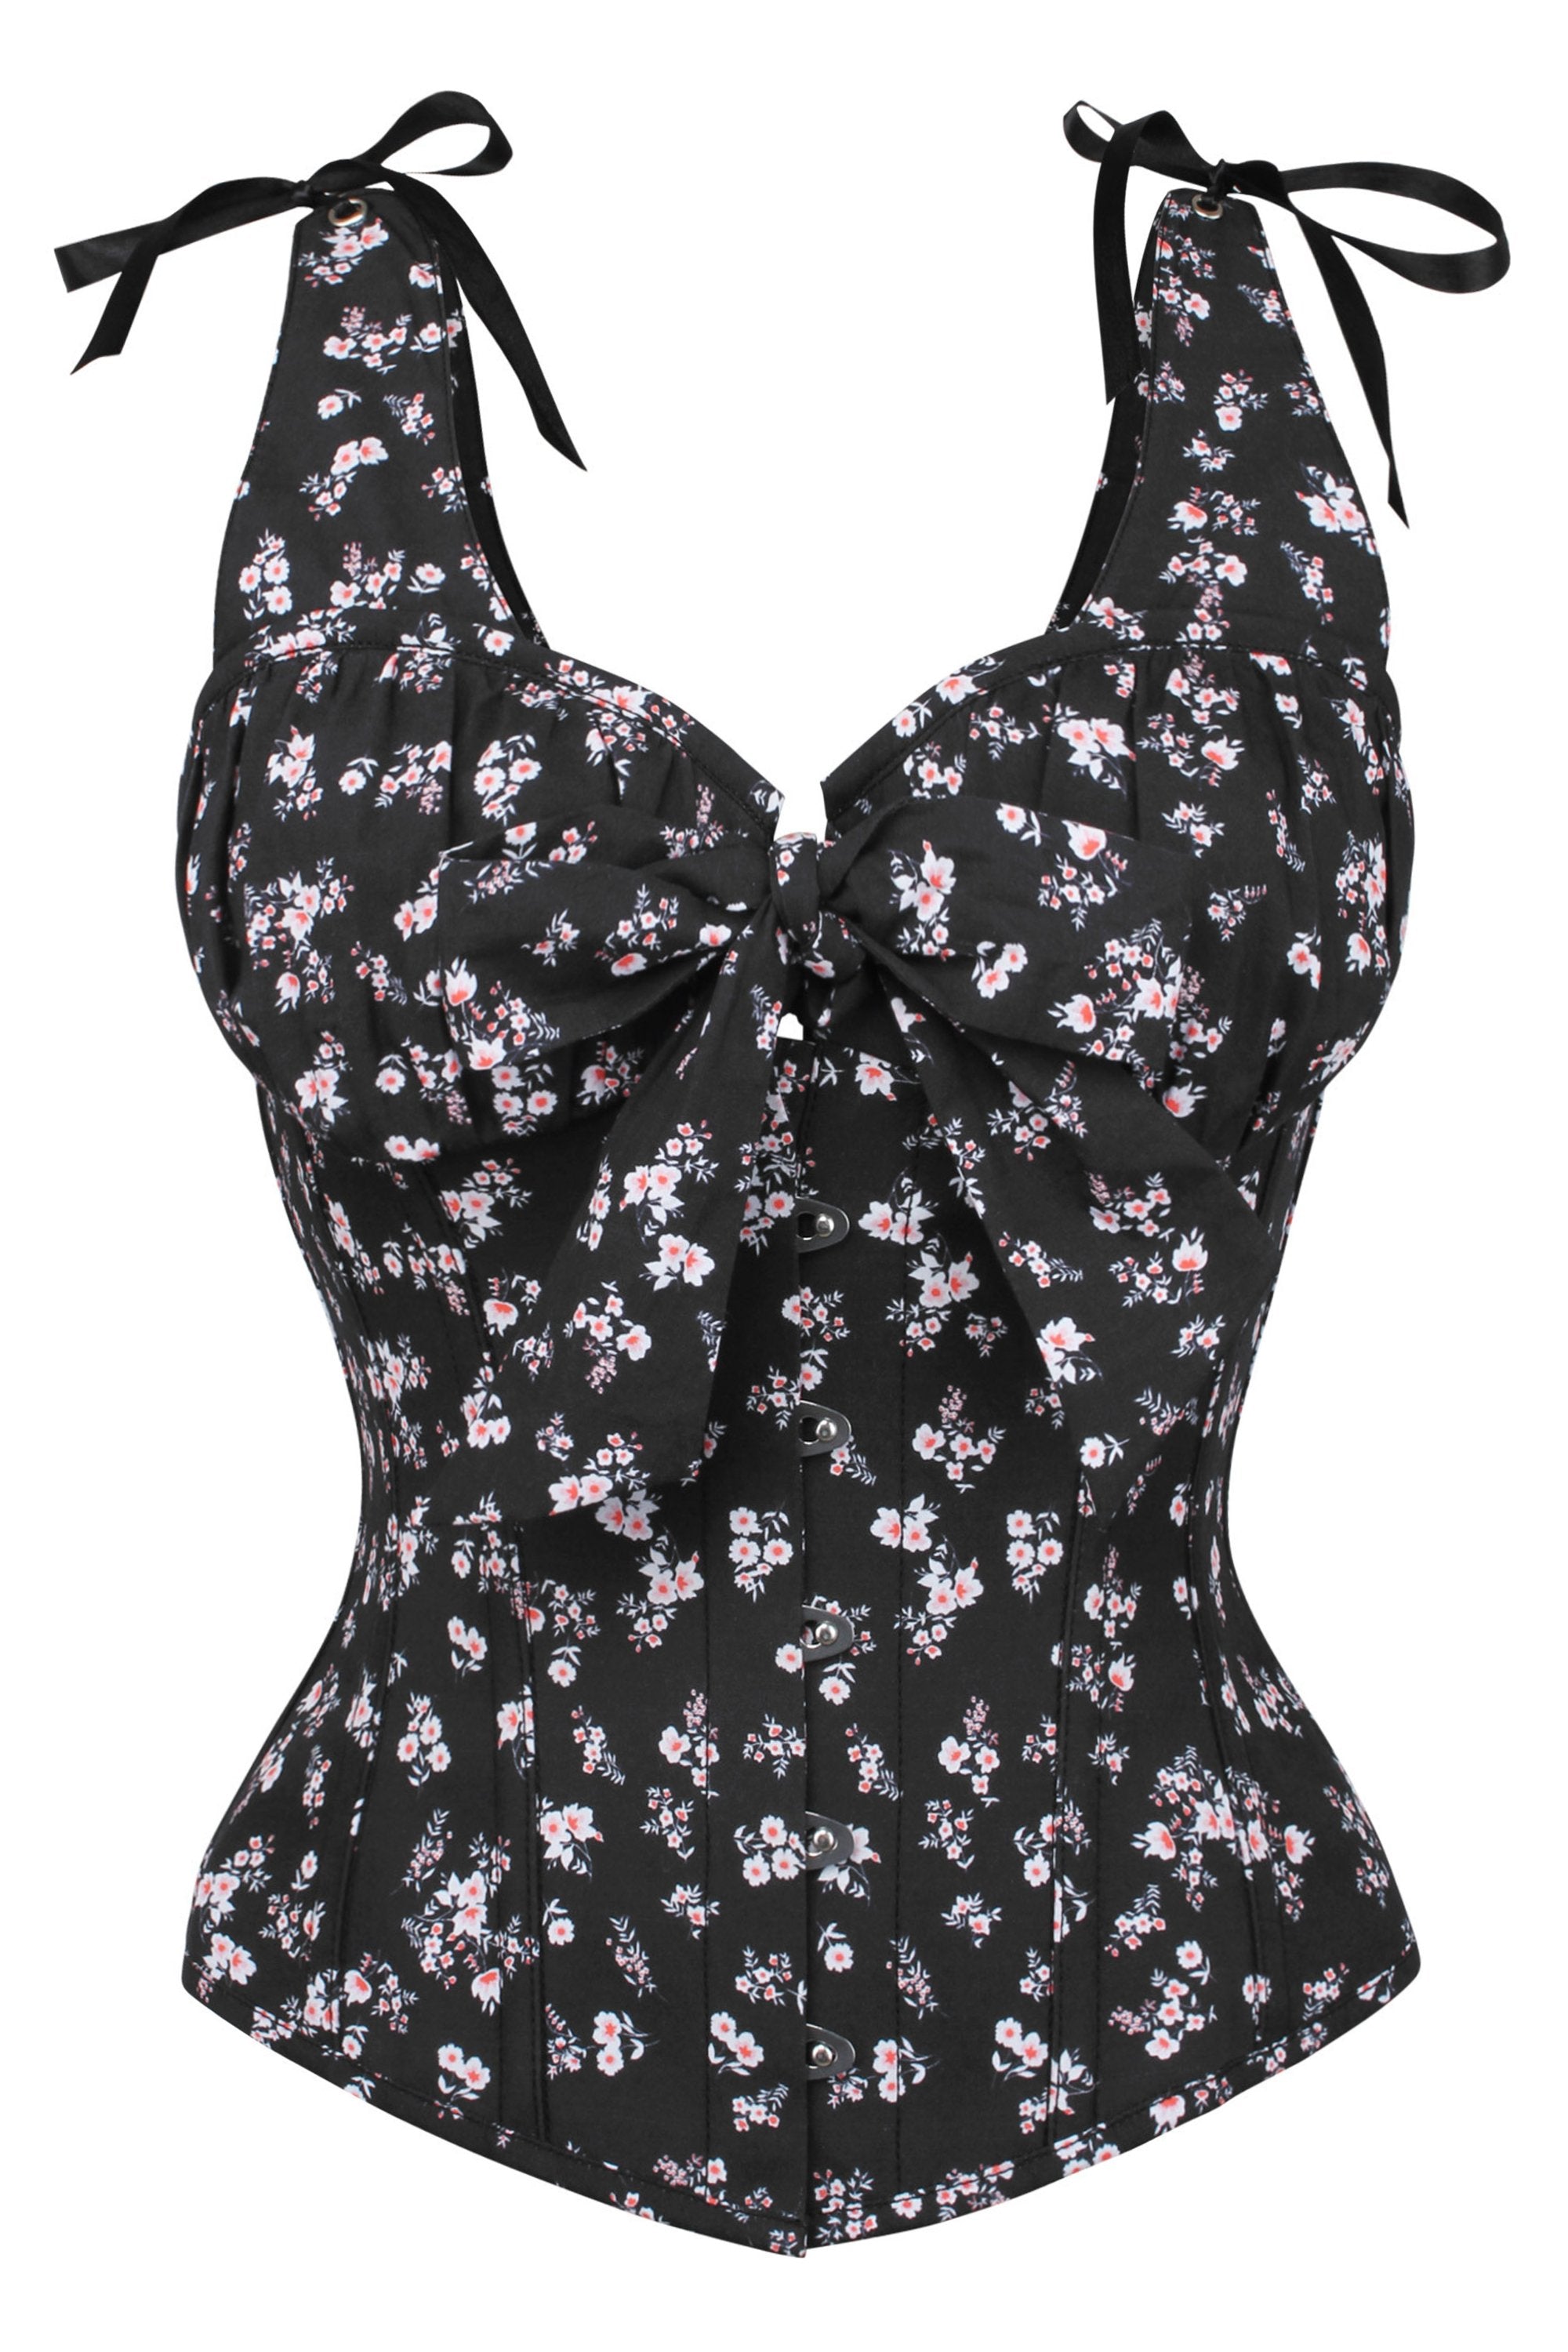 ASOS DESIGN corset detail suit co ord top in dark floral